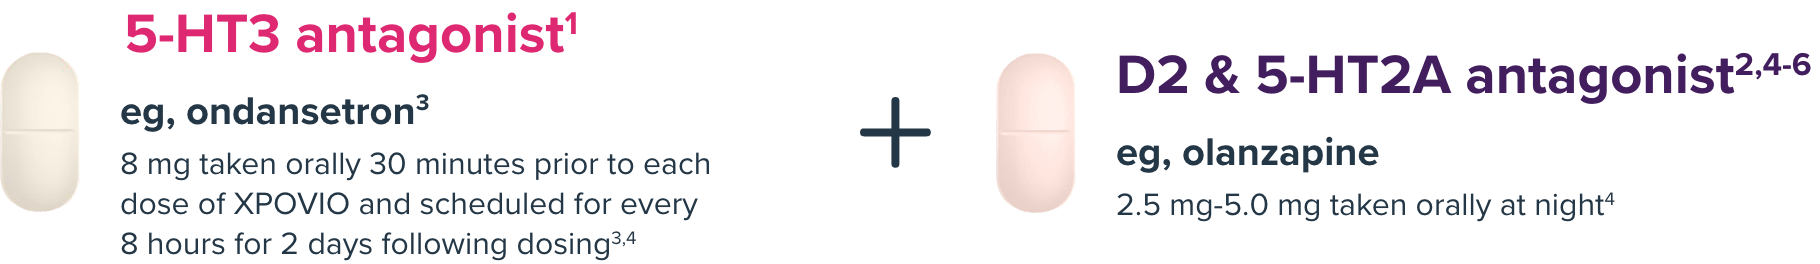 Graphic shows 2 antiemetics